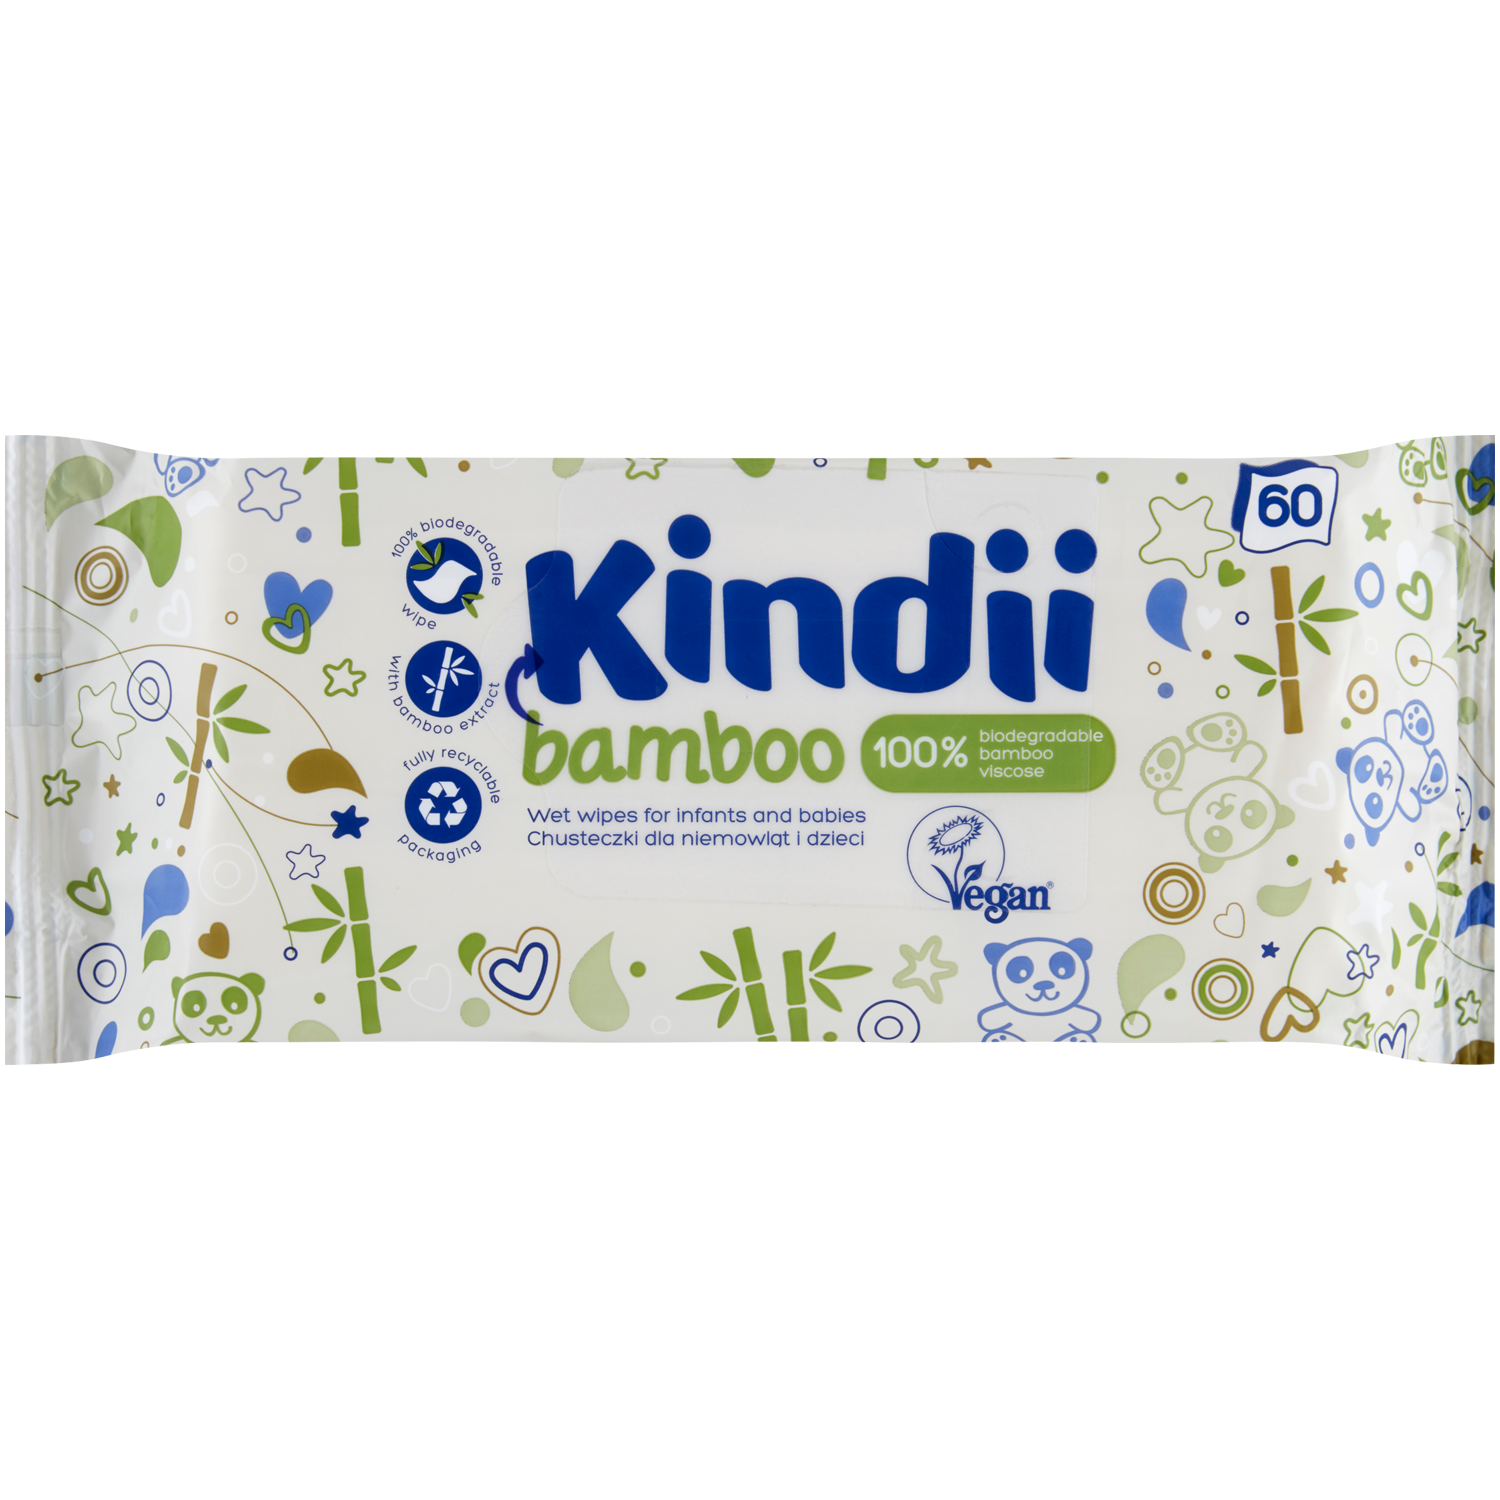 Kindii Bamboo детские влажные салфетки, 60 шт/1 упаковка kindii extra soft влажные салфетки детские 60 шт уп 9 шт